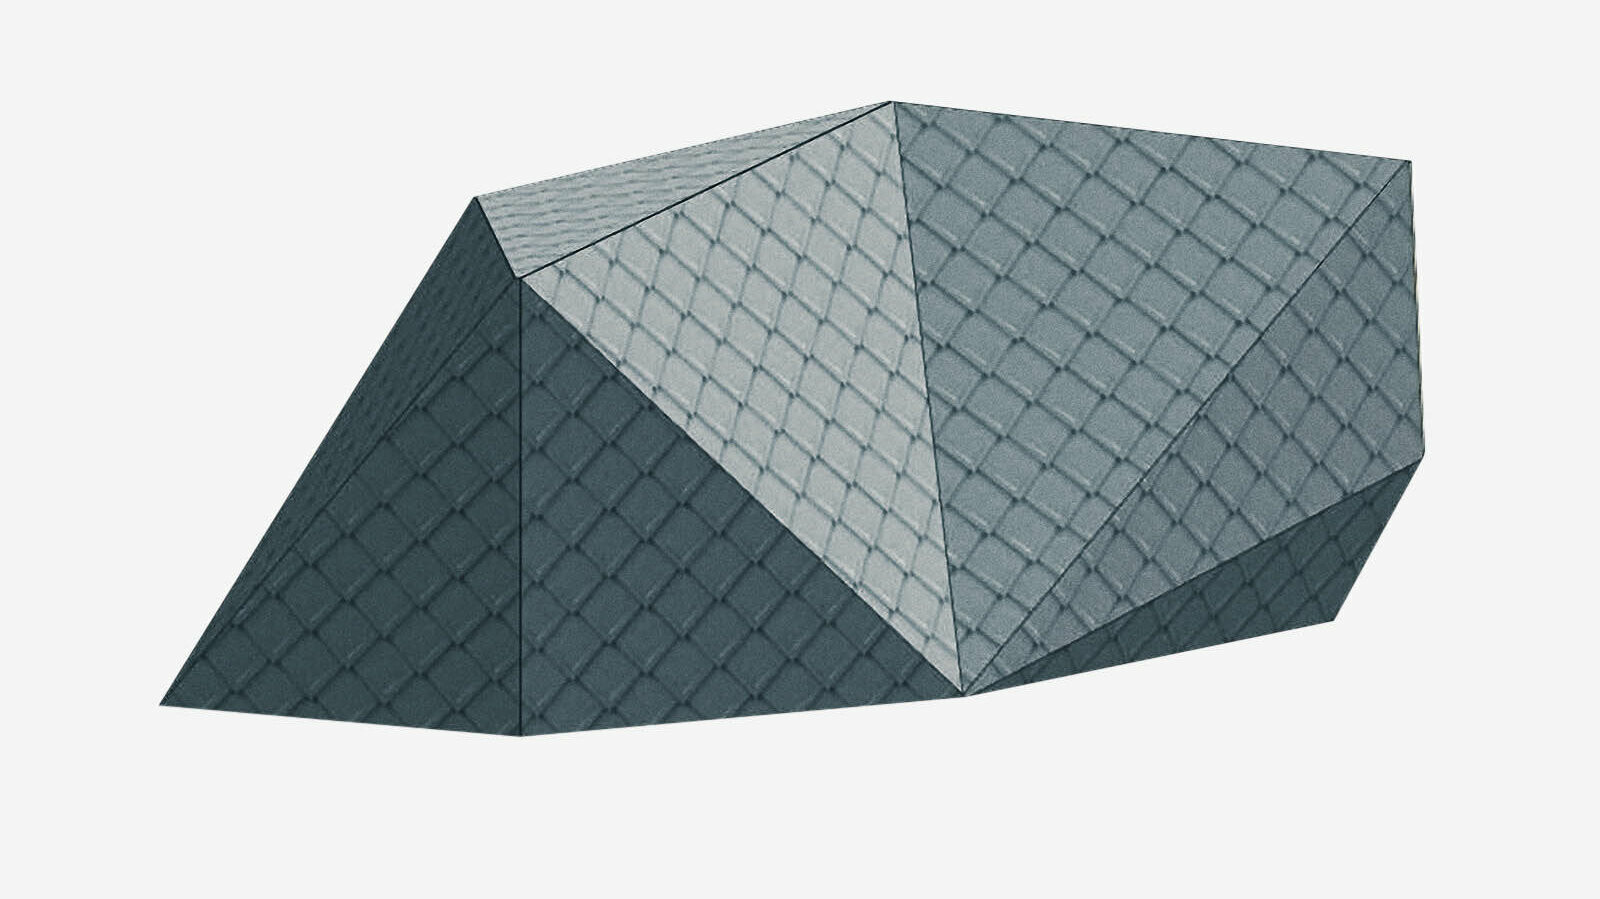 A 3D model of the Wisswak. This 3D model also visualises the PREFA aluminium rhomboid façade tiles 29x29.